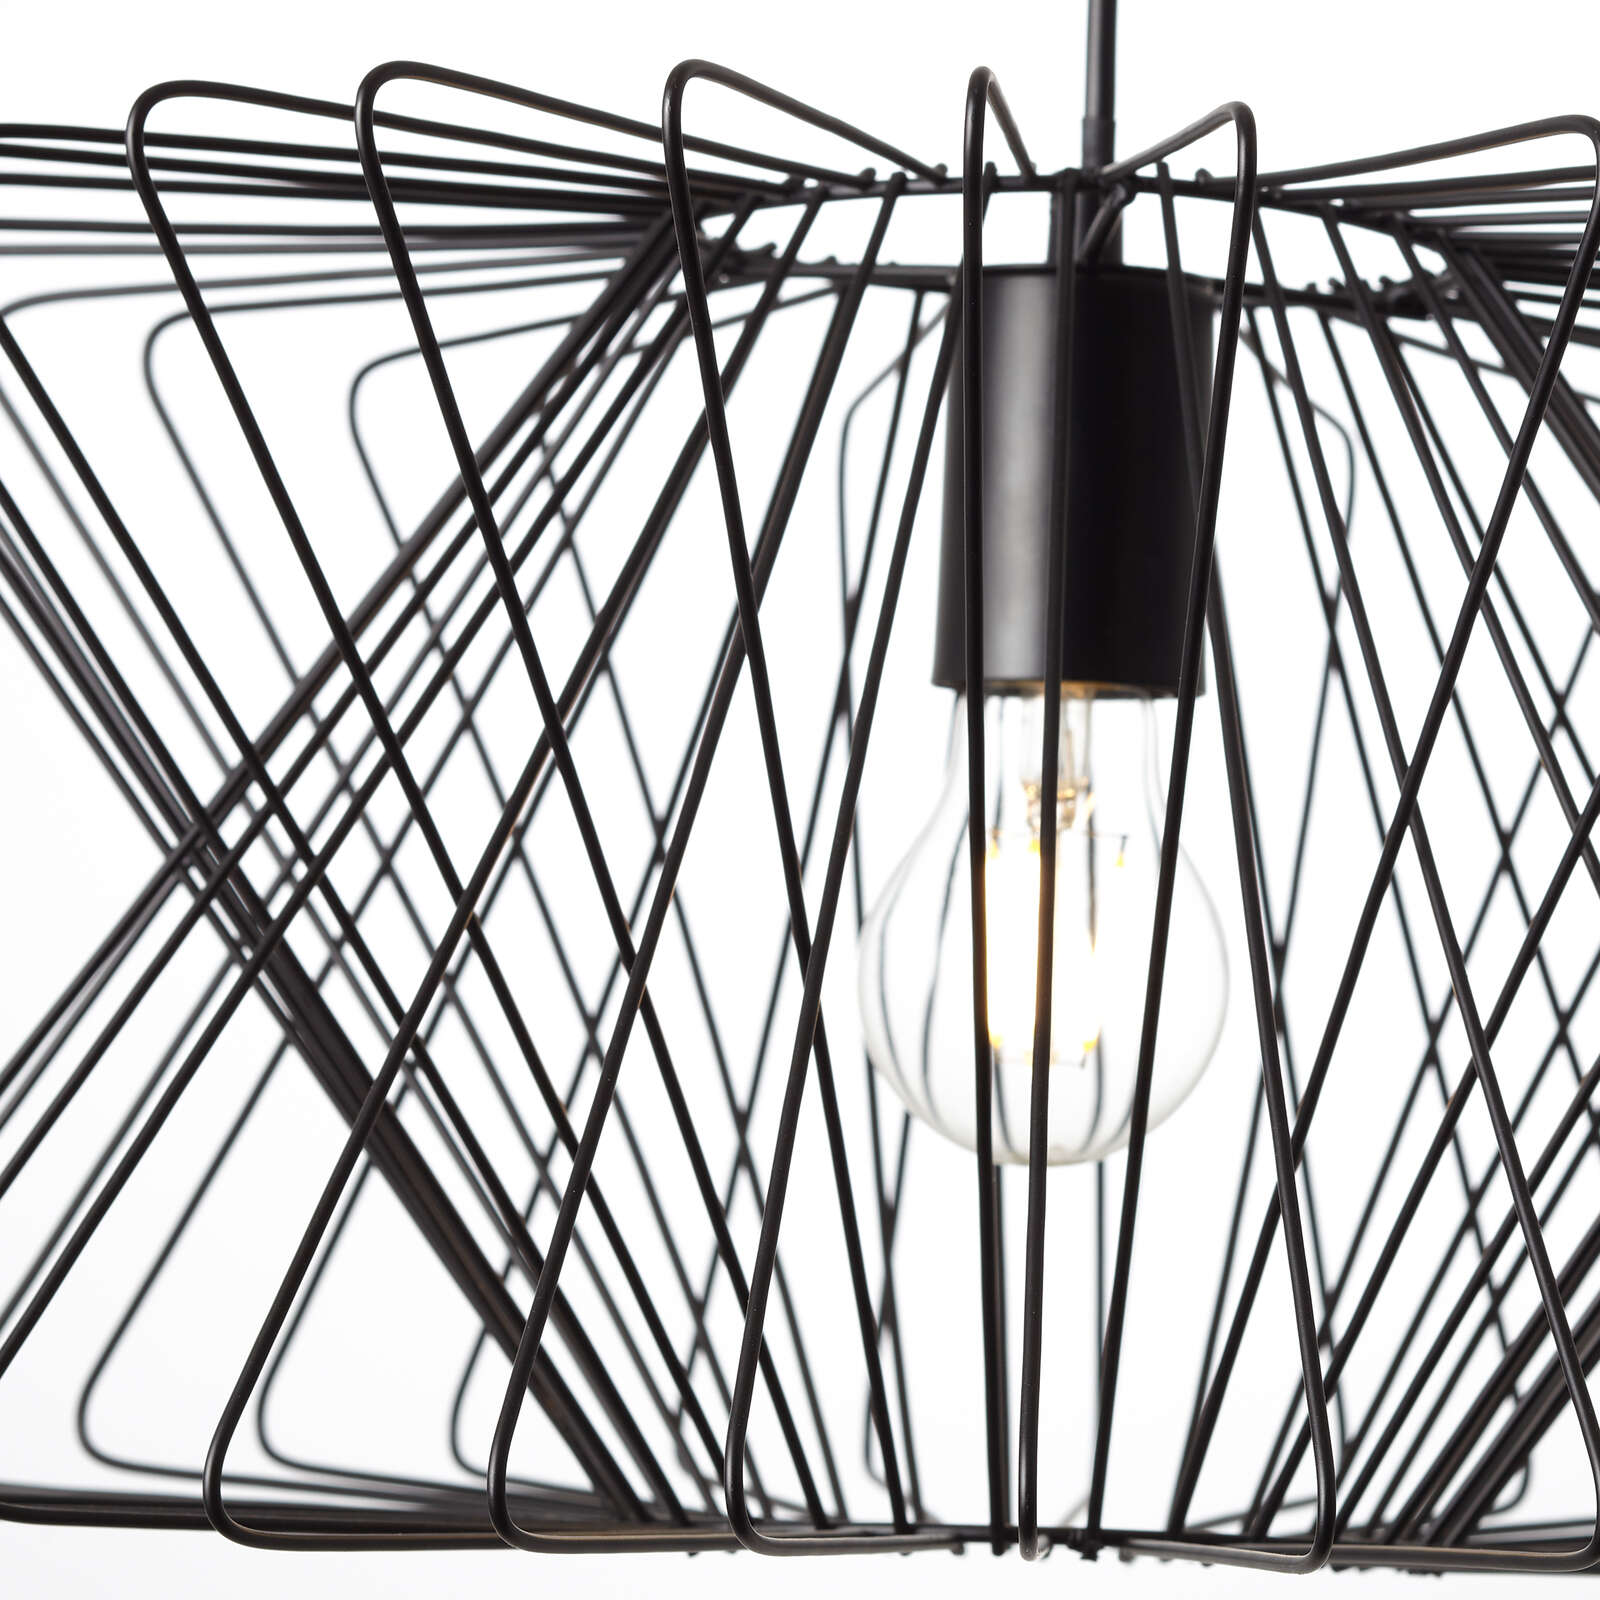             Metalen hanglamp - Hedi - Zwart
        